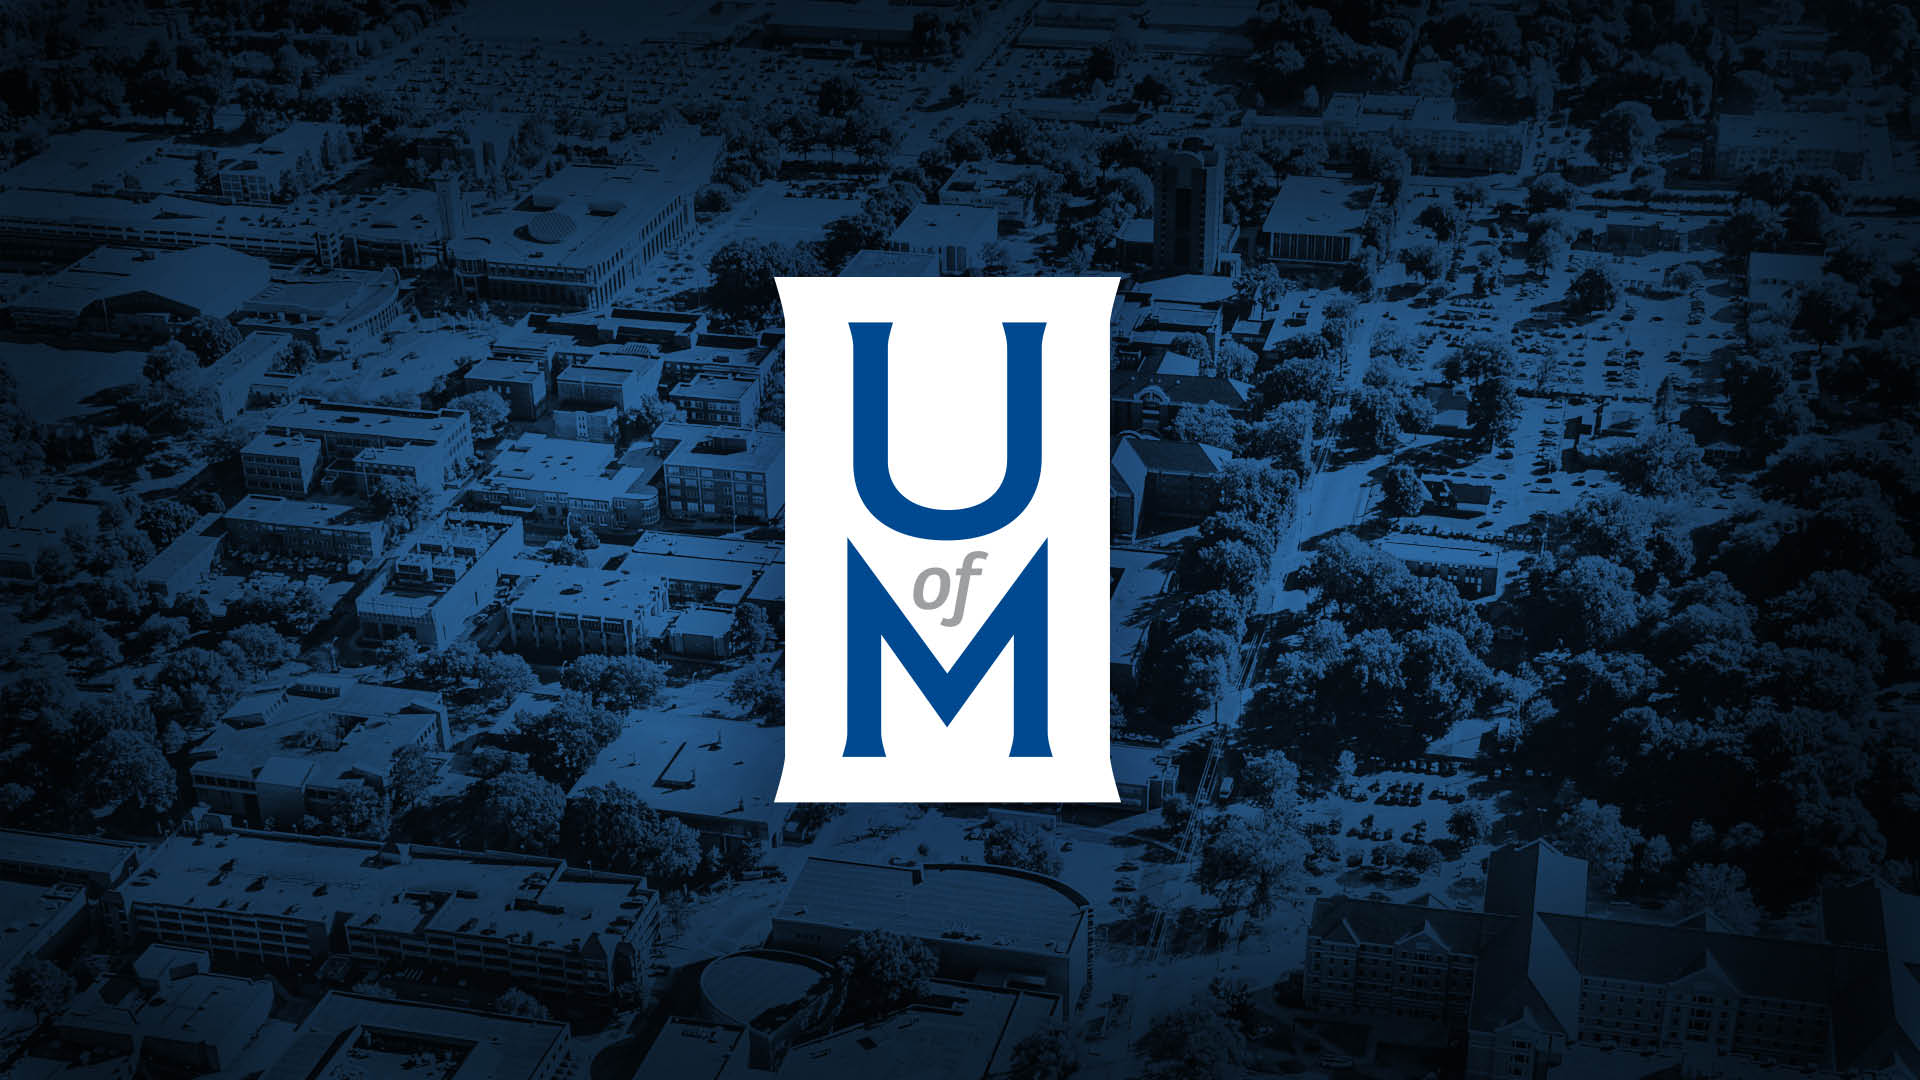 UofM logo over campus wallpaper